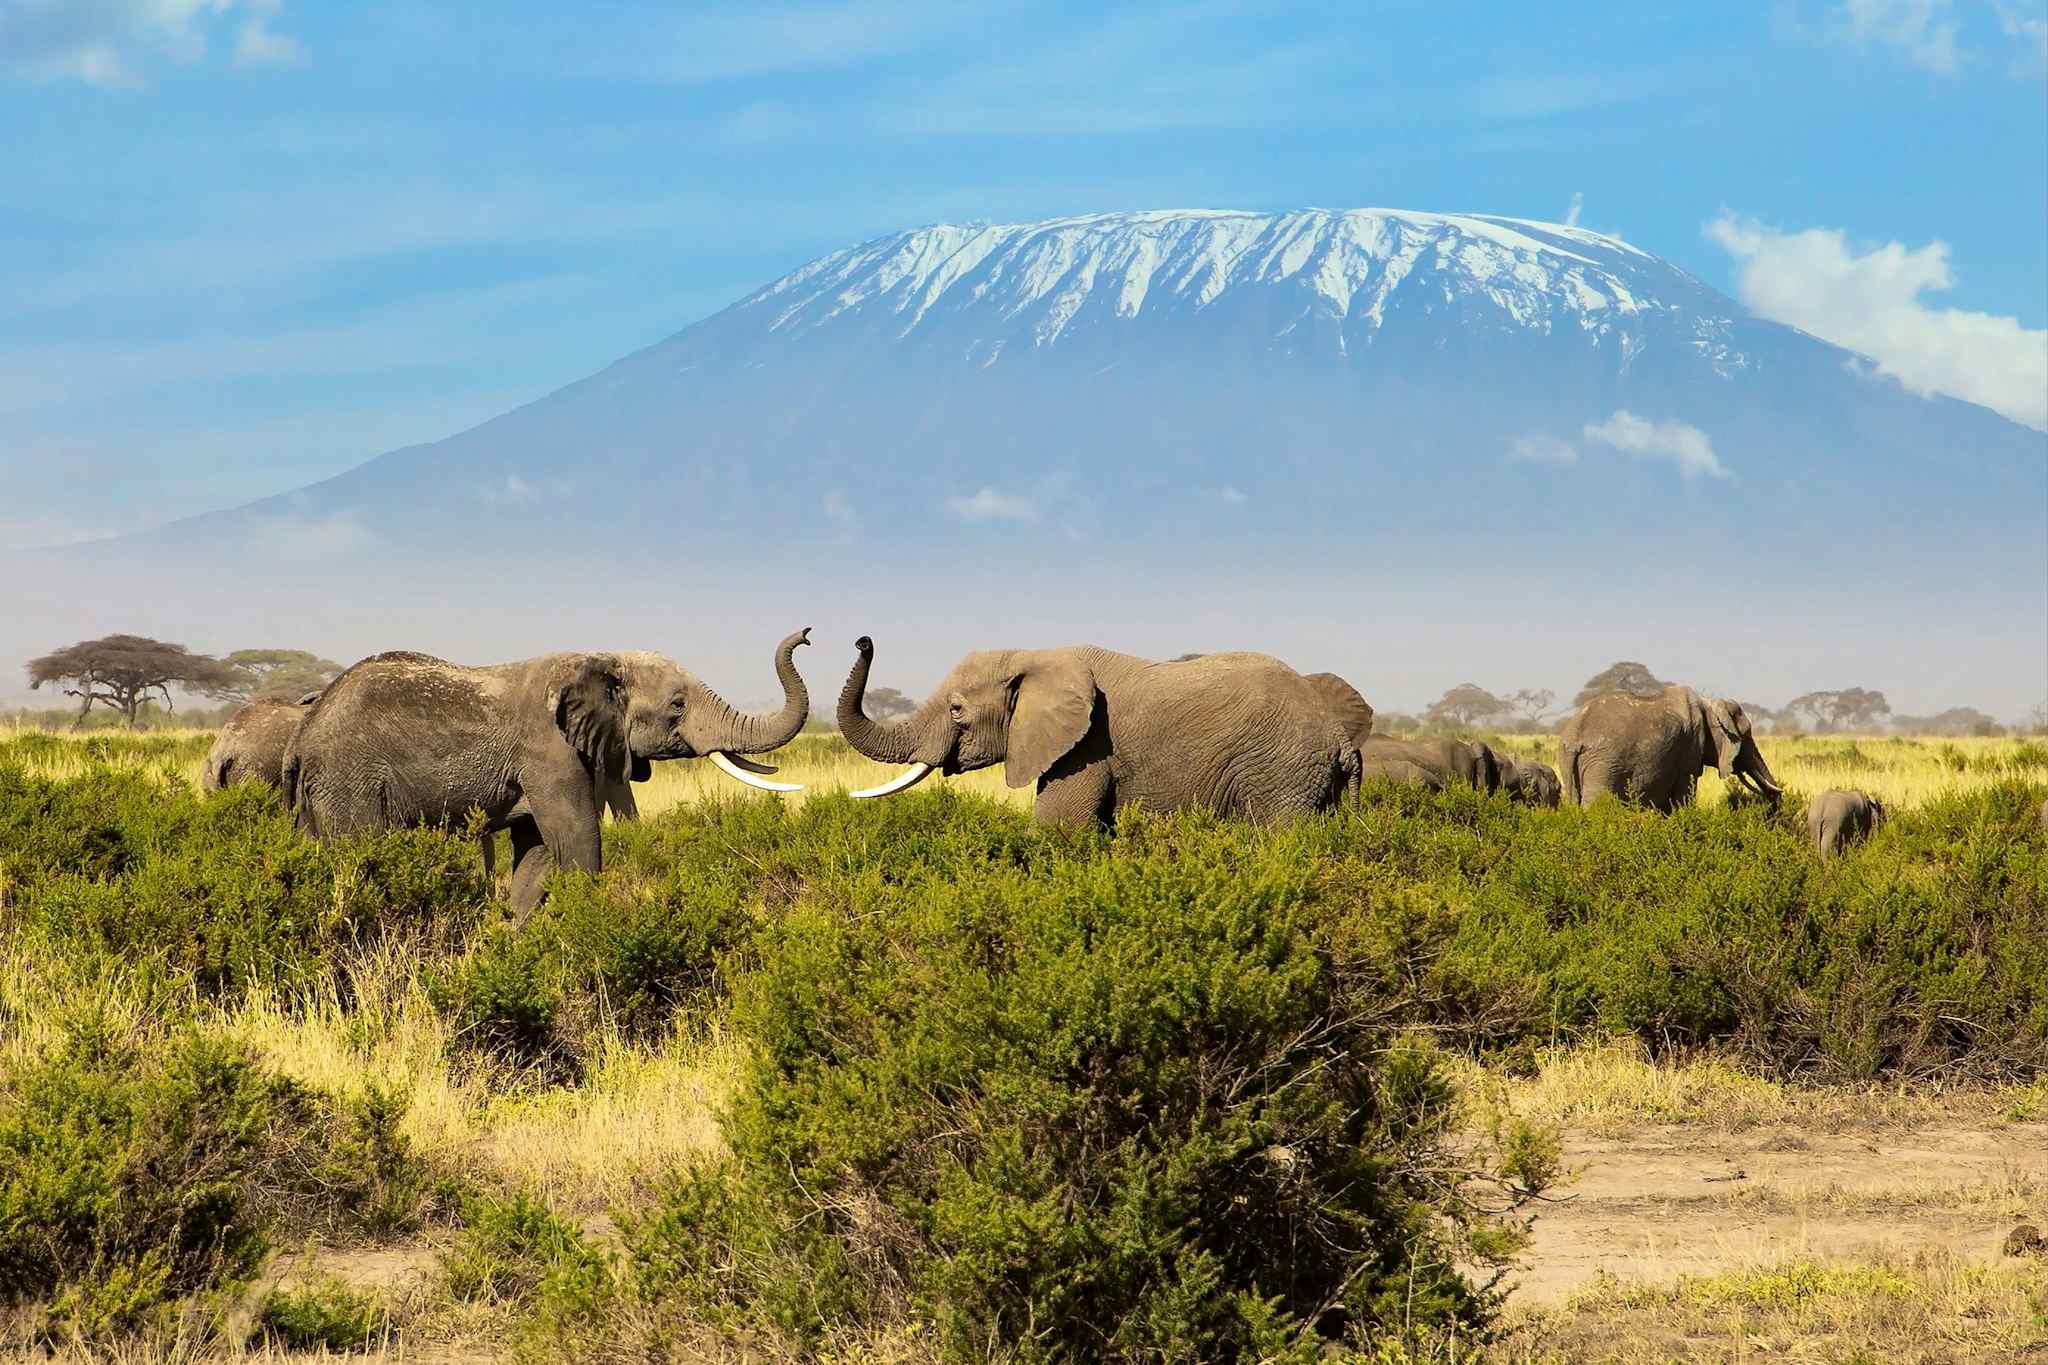 Two elephants in front of Kilimanjaro, Tanzania.